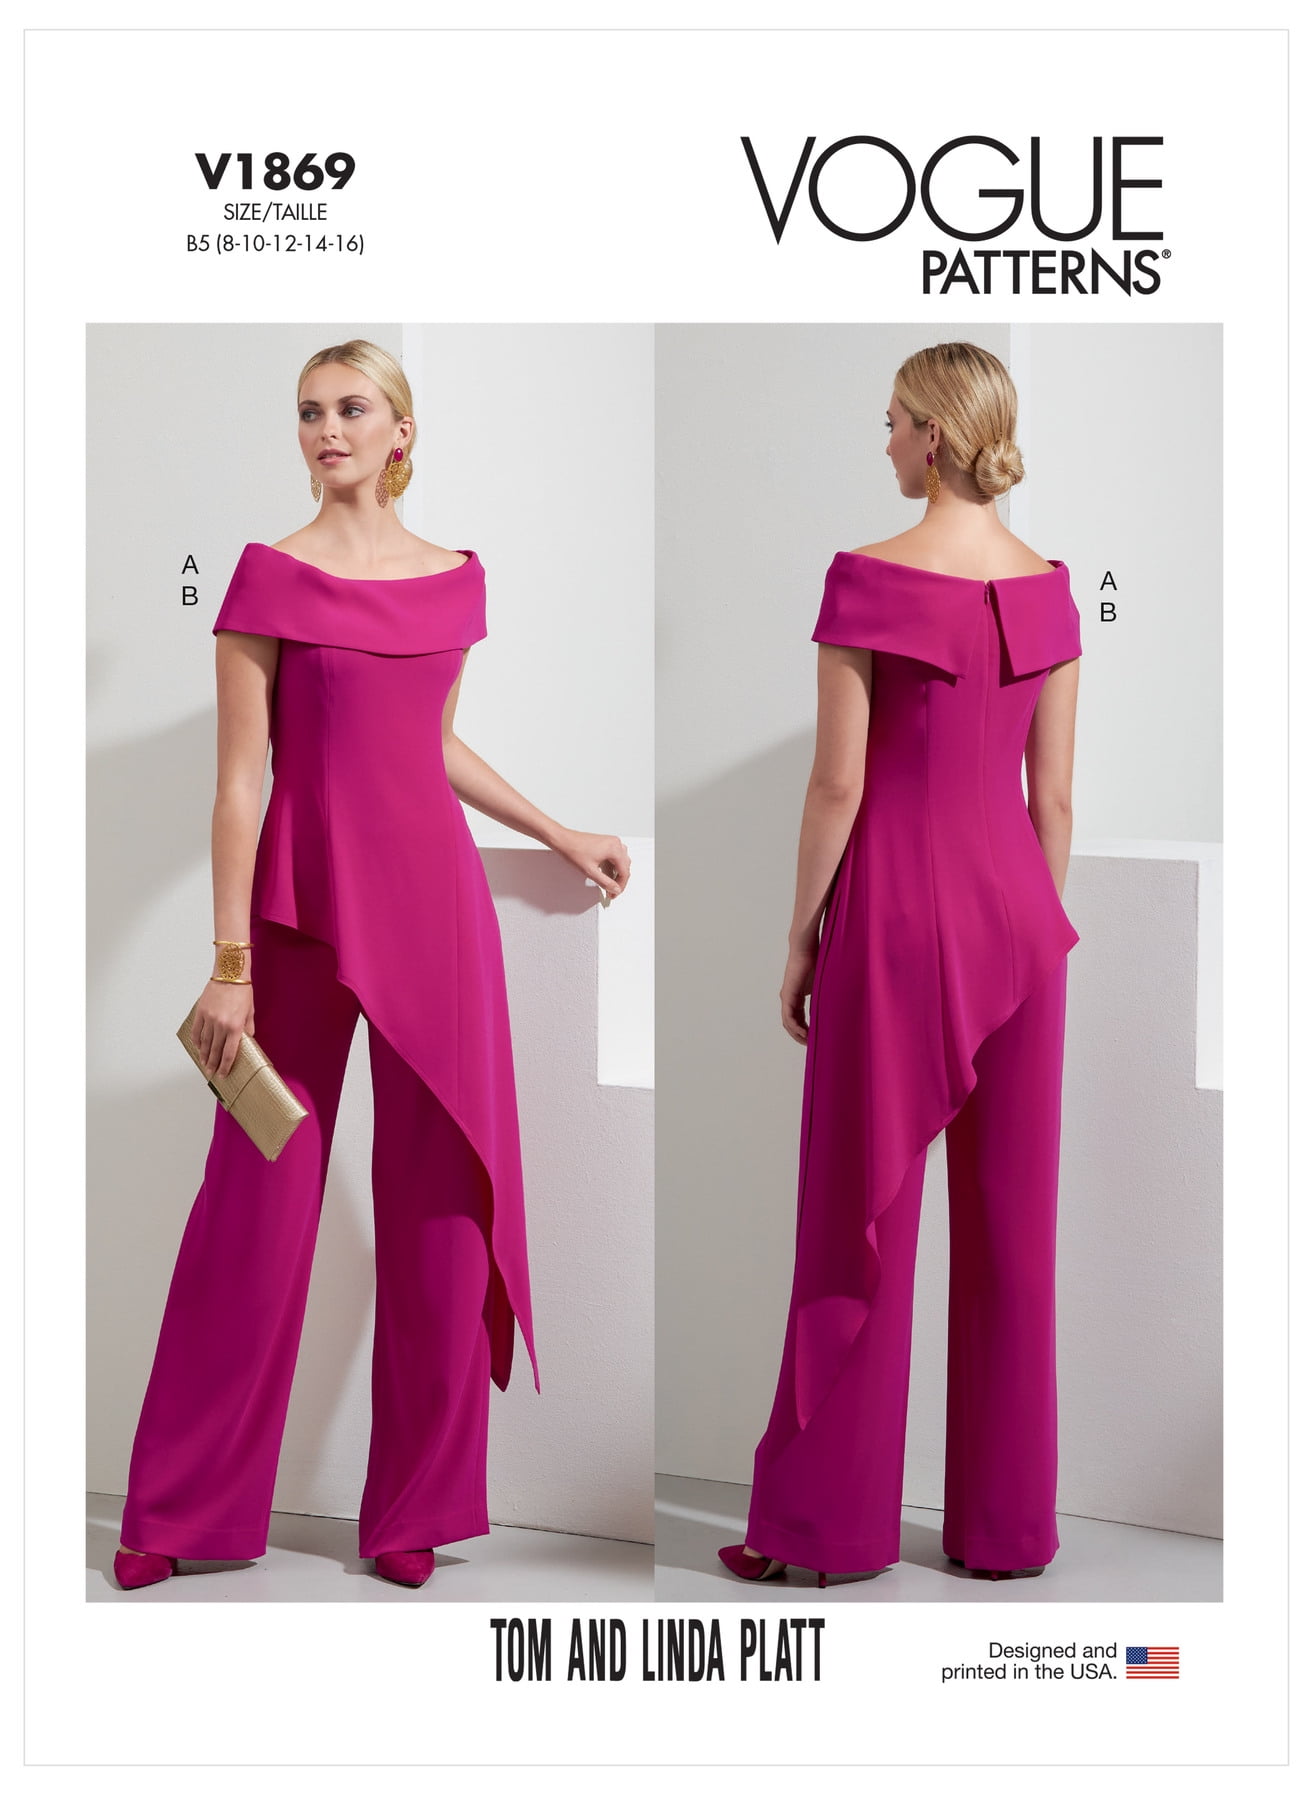 14 16 Dress Vogue Patterns vogue sewing patterns women Vogue Patterns Size 12 